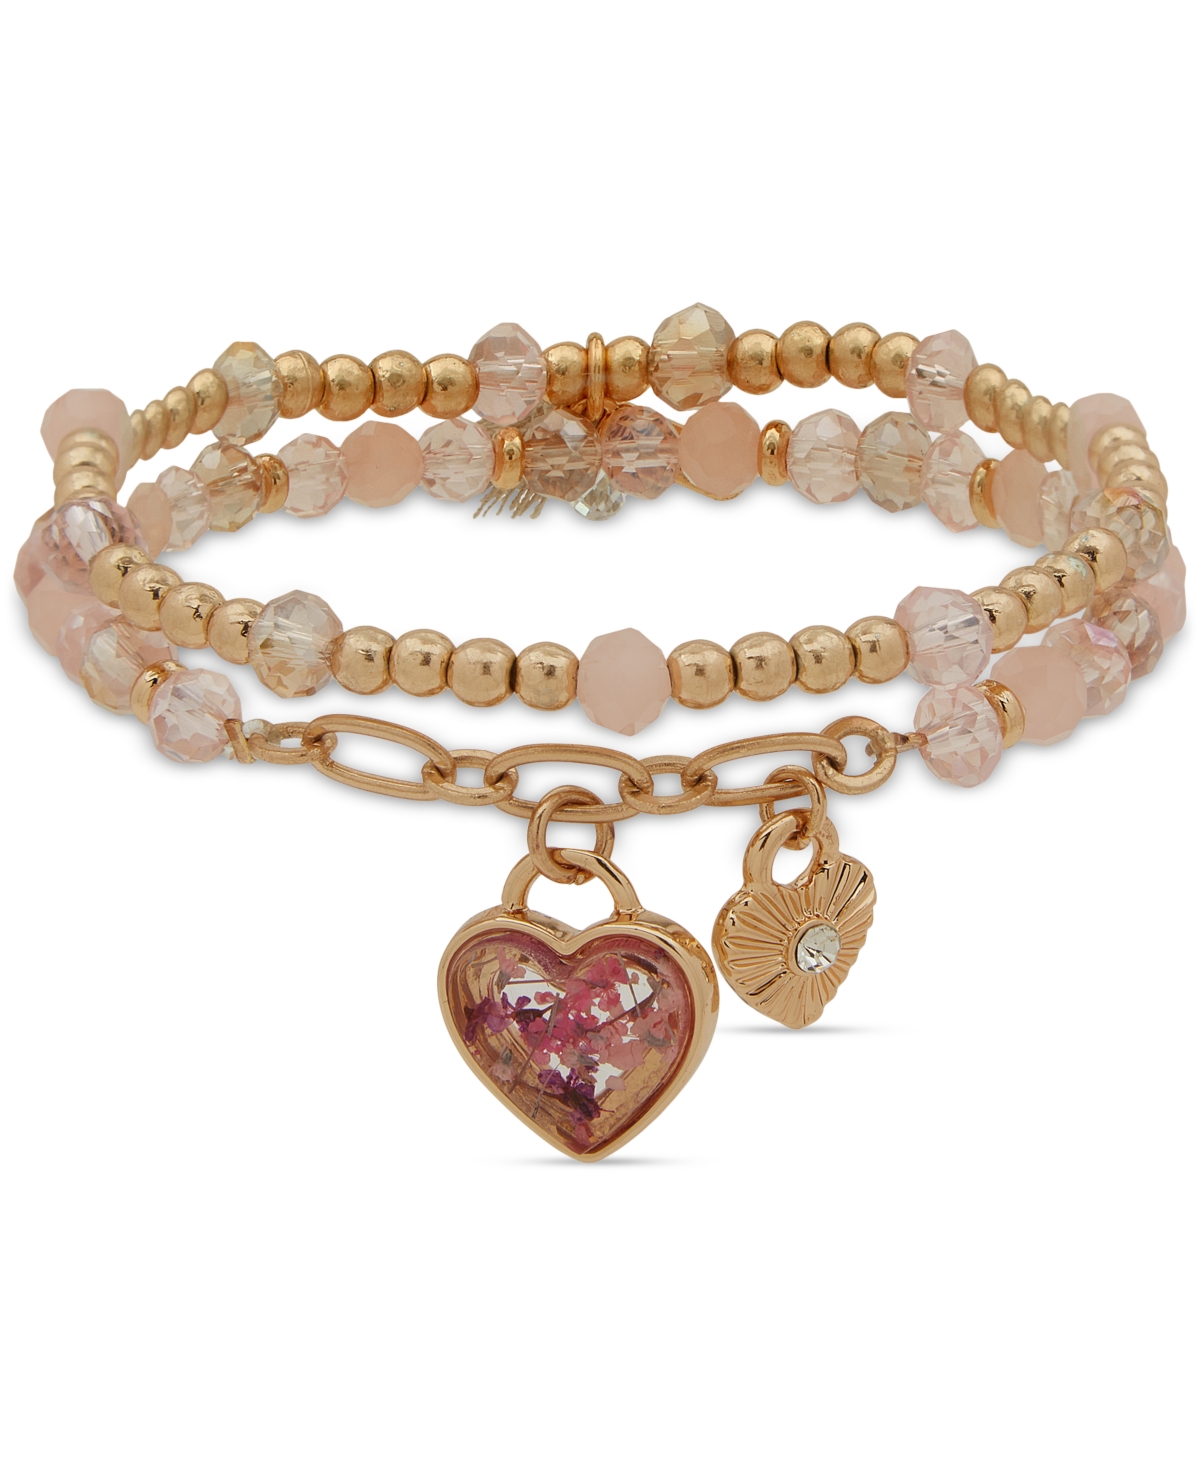 Gold-Tone Heart Charm Beaded Double Row Bracelet - Pink